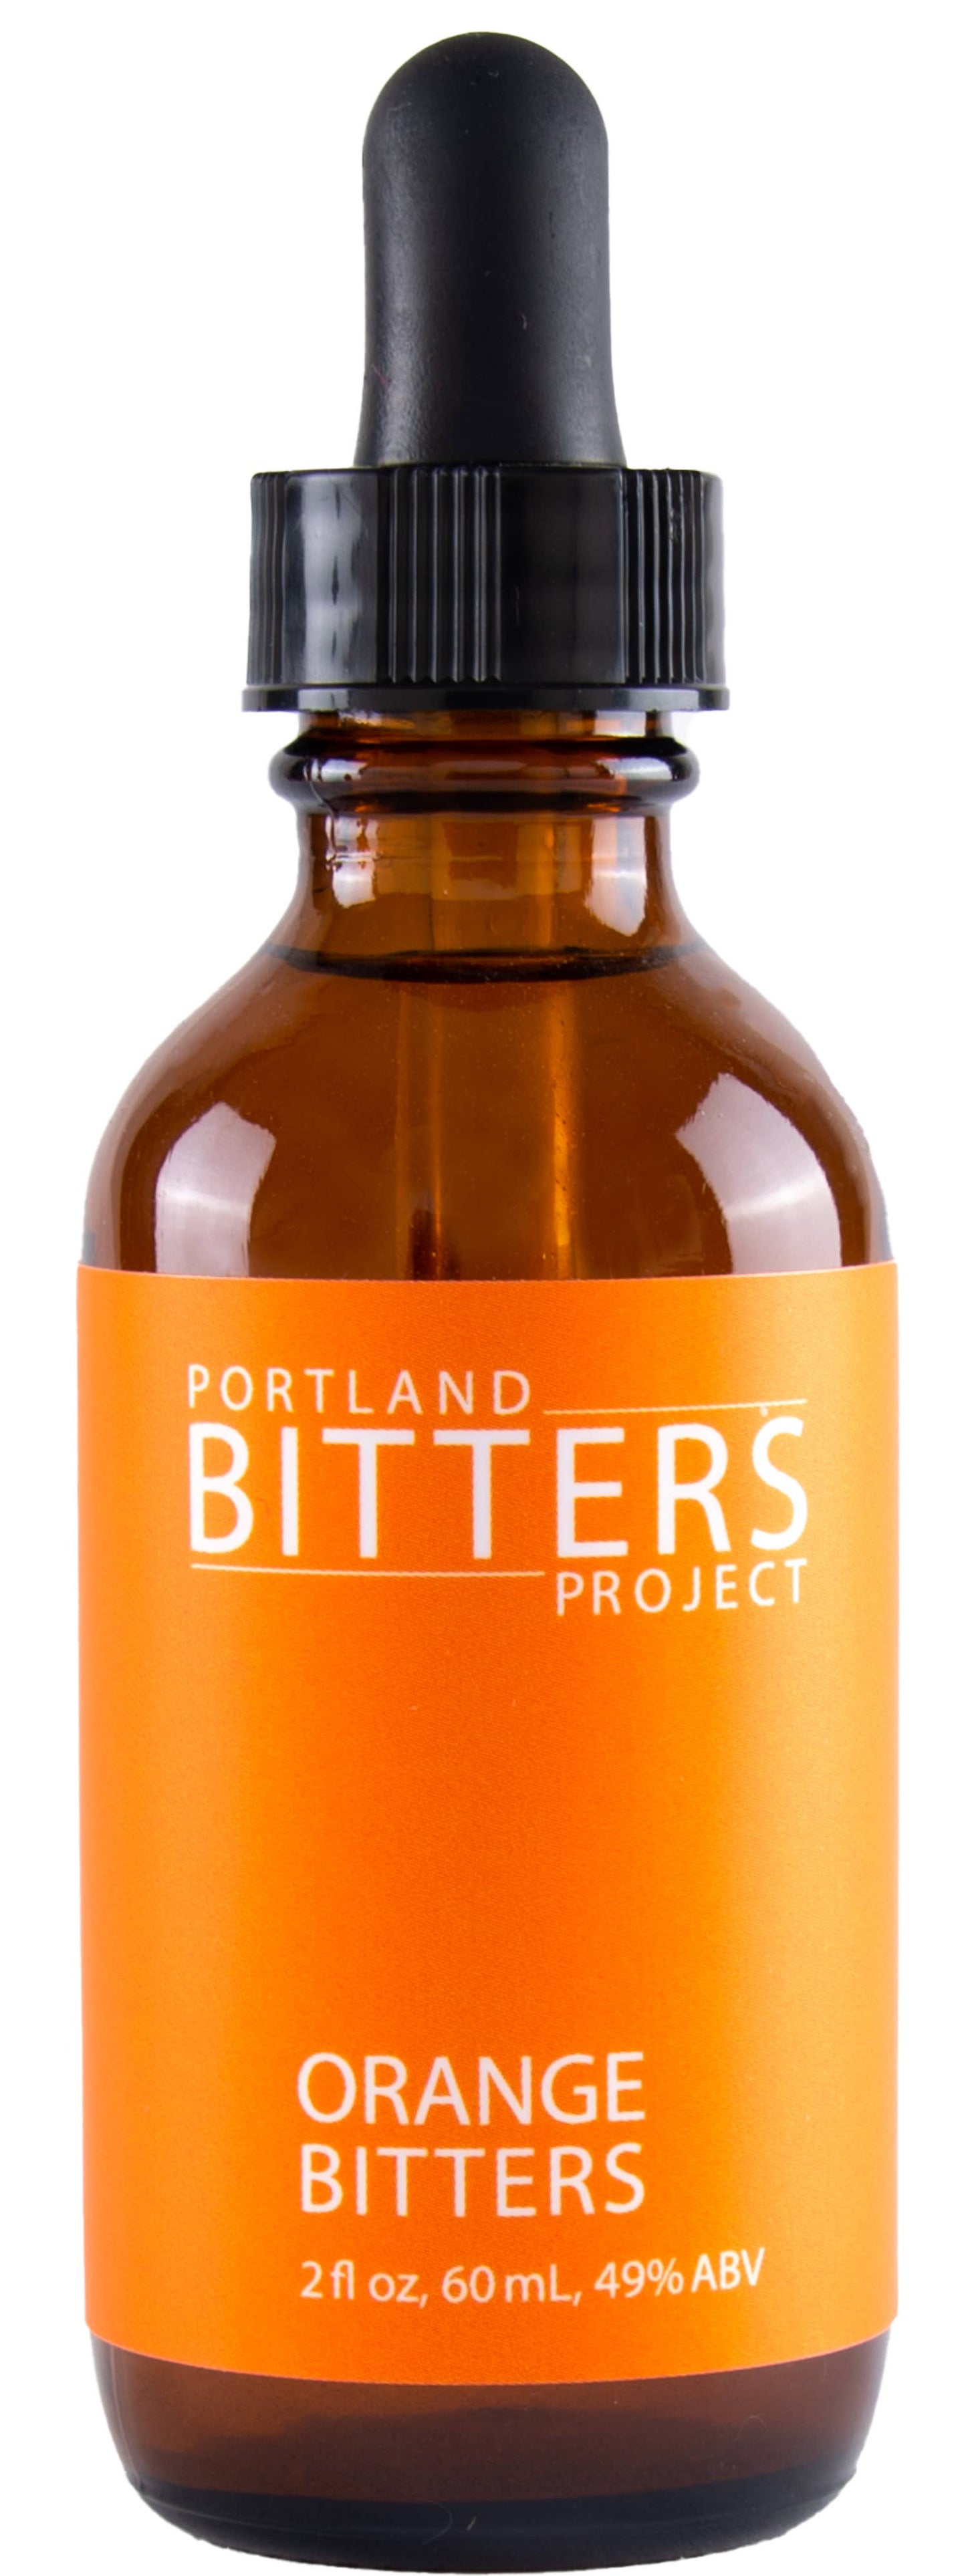 Portland Bitters Project - Orange Bitters - 2 oz